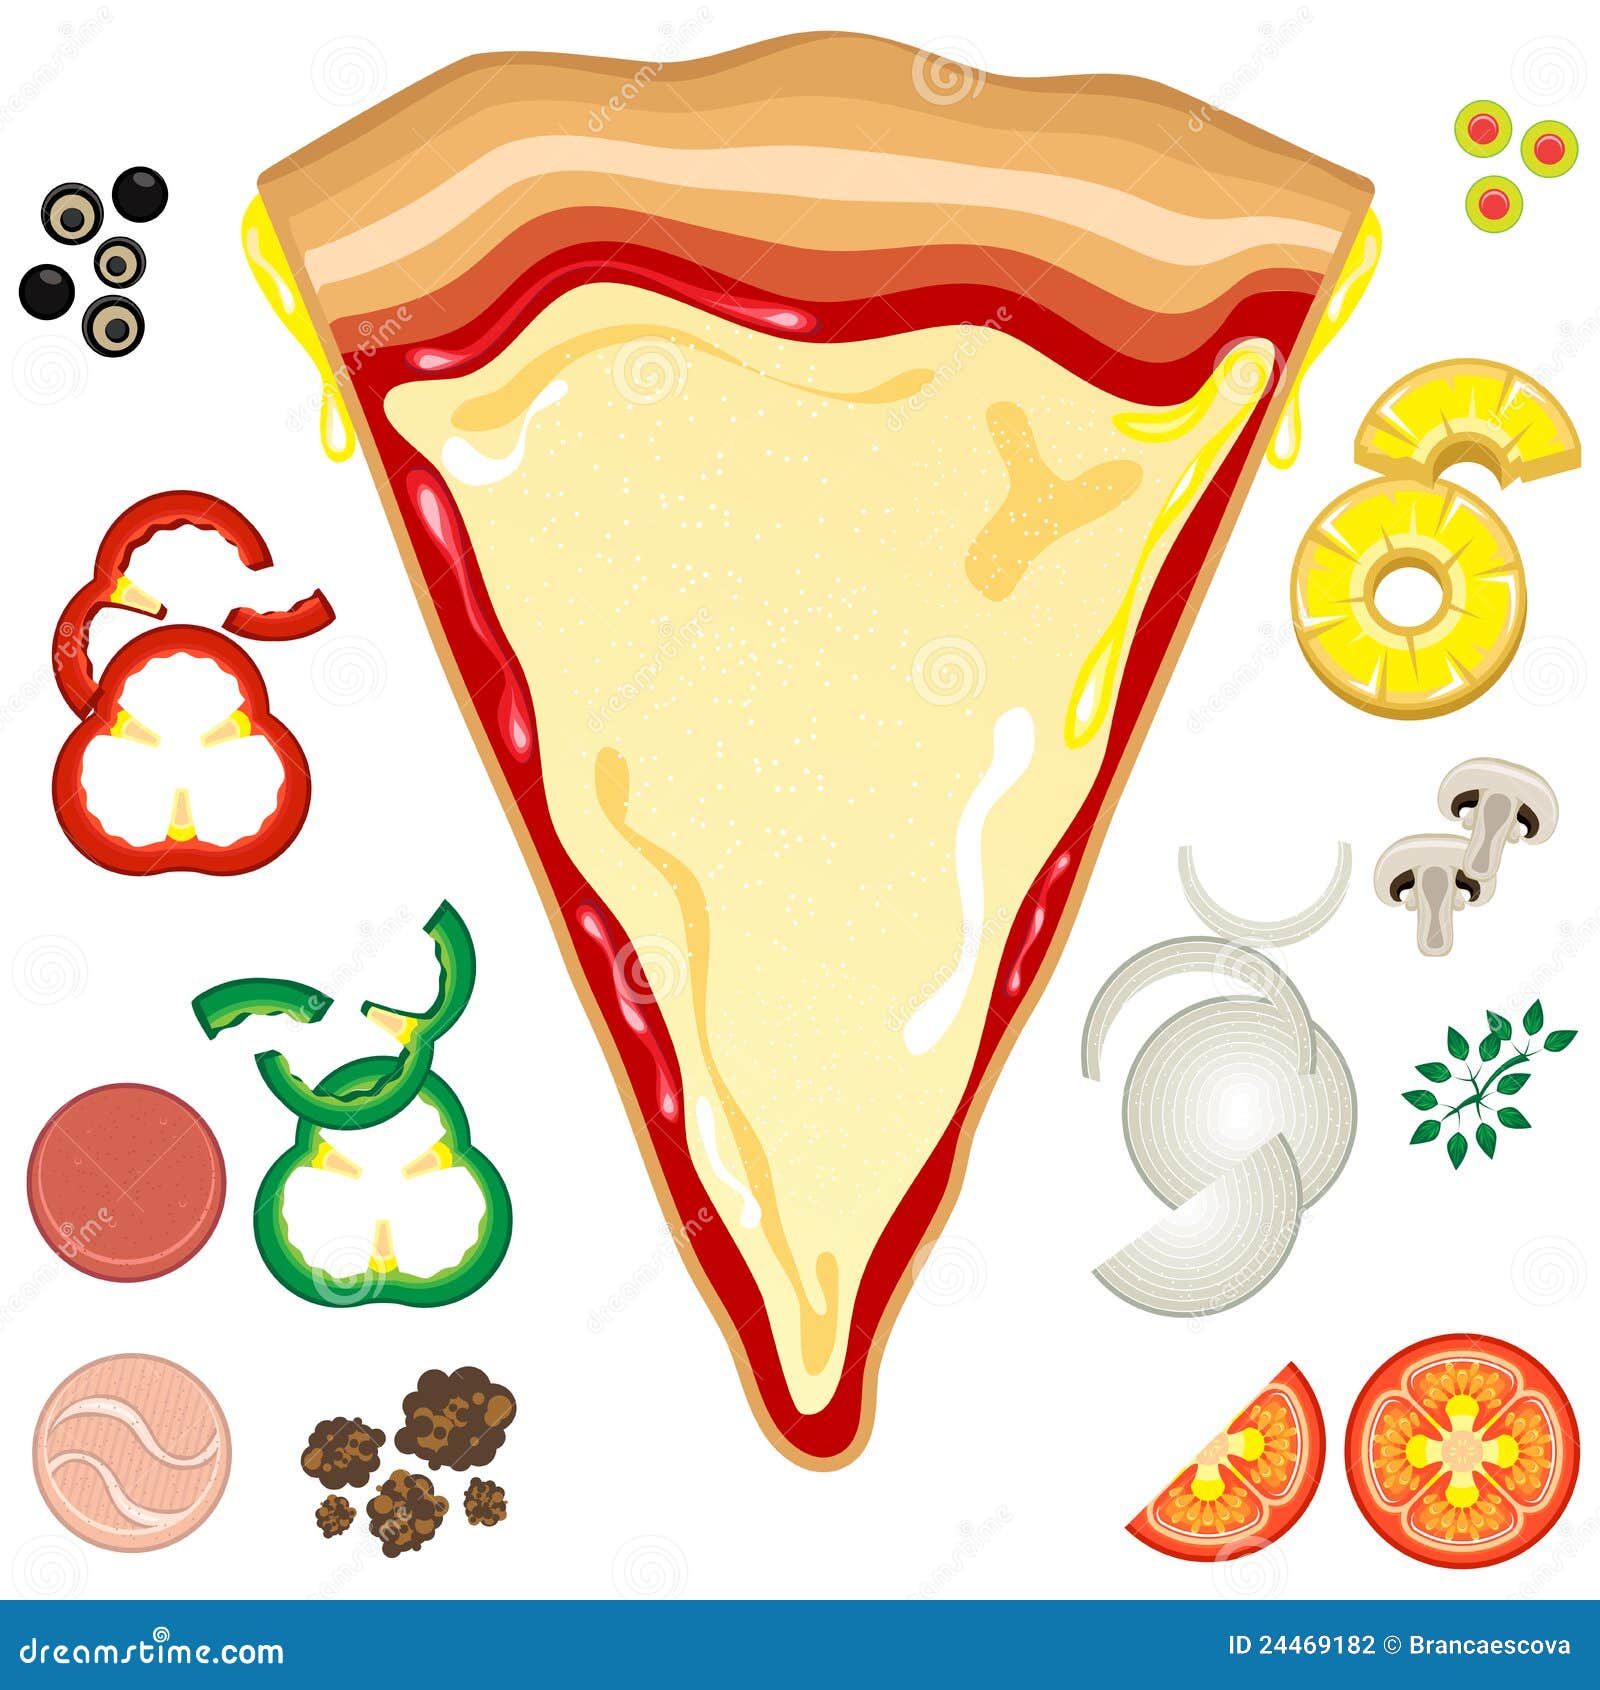 pizza menu clip art - photo #50